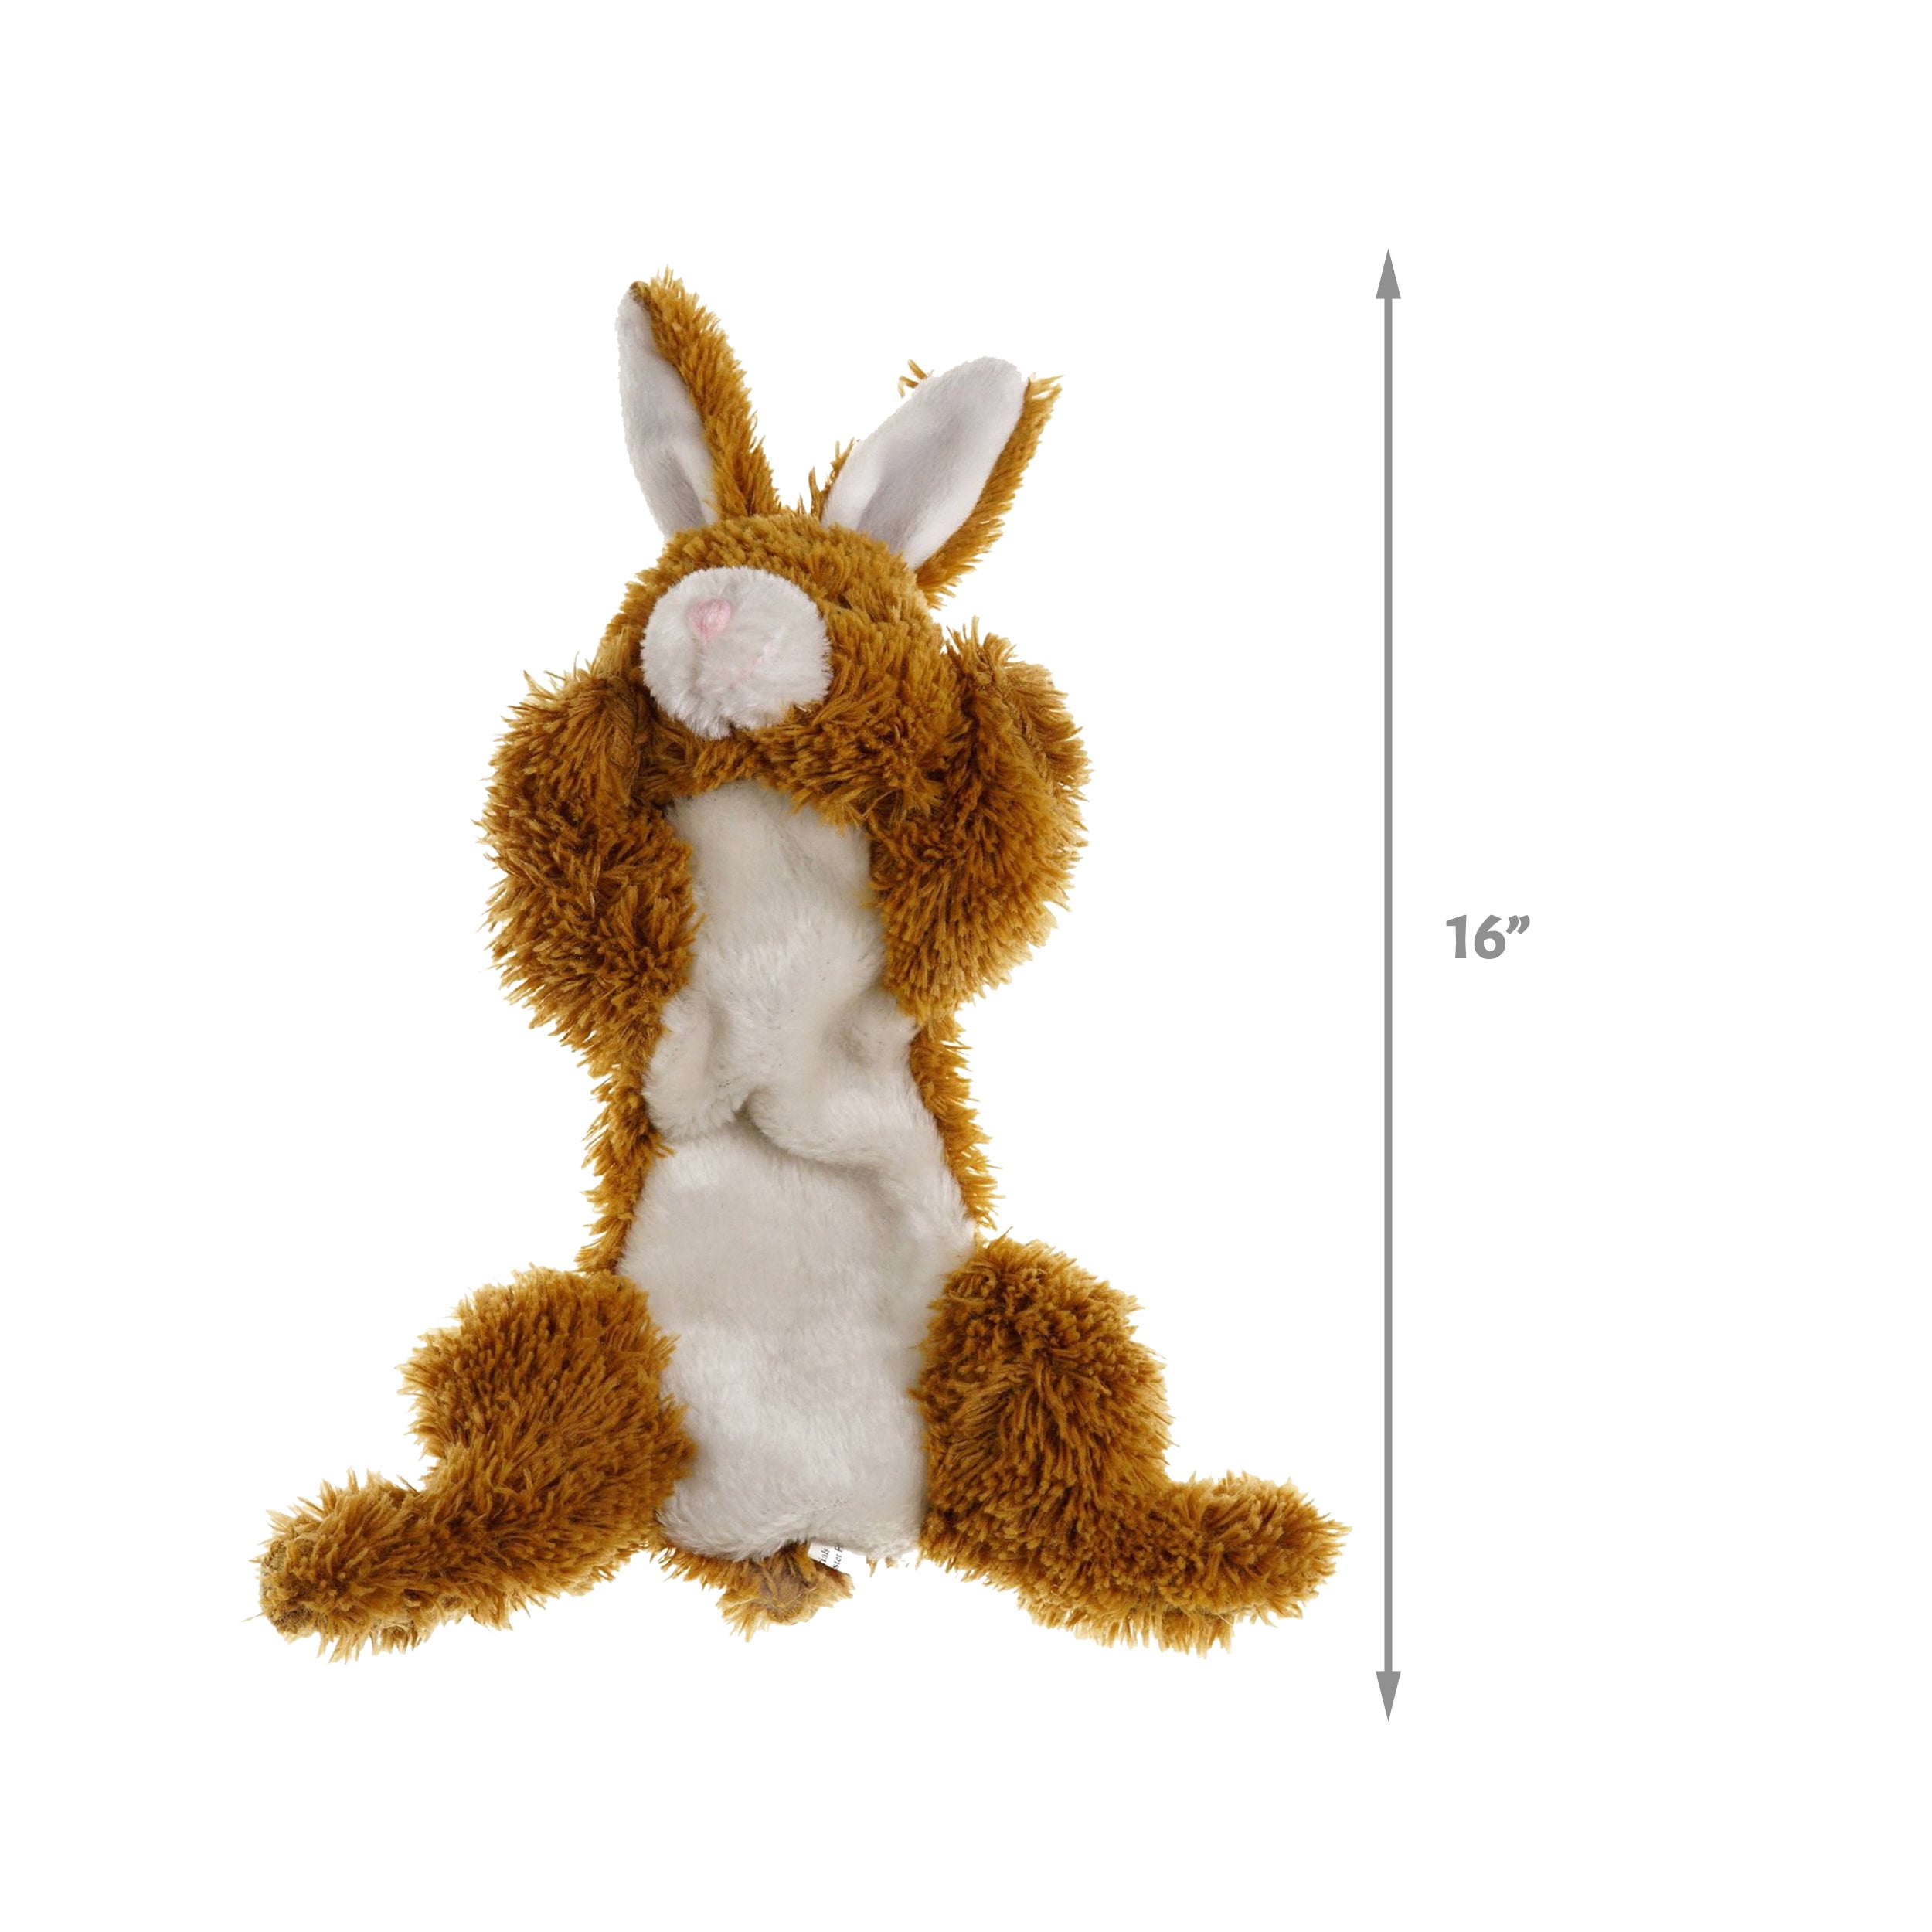 [Dog toy] No Stuffing Squeaky Soft Rabbit